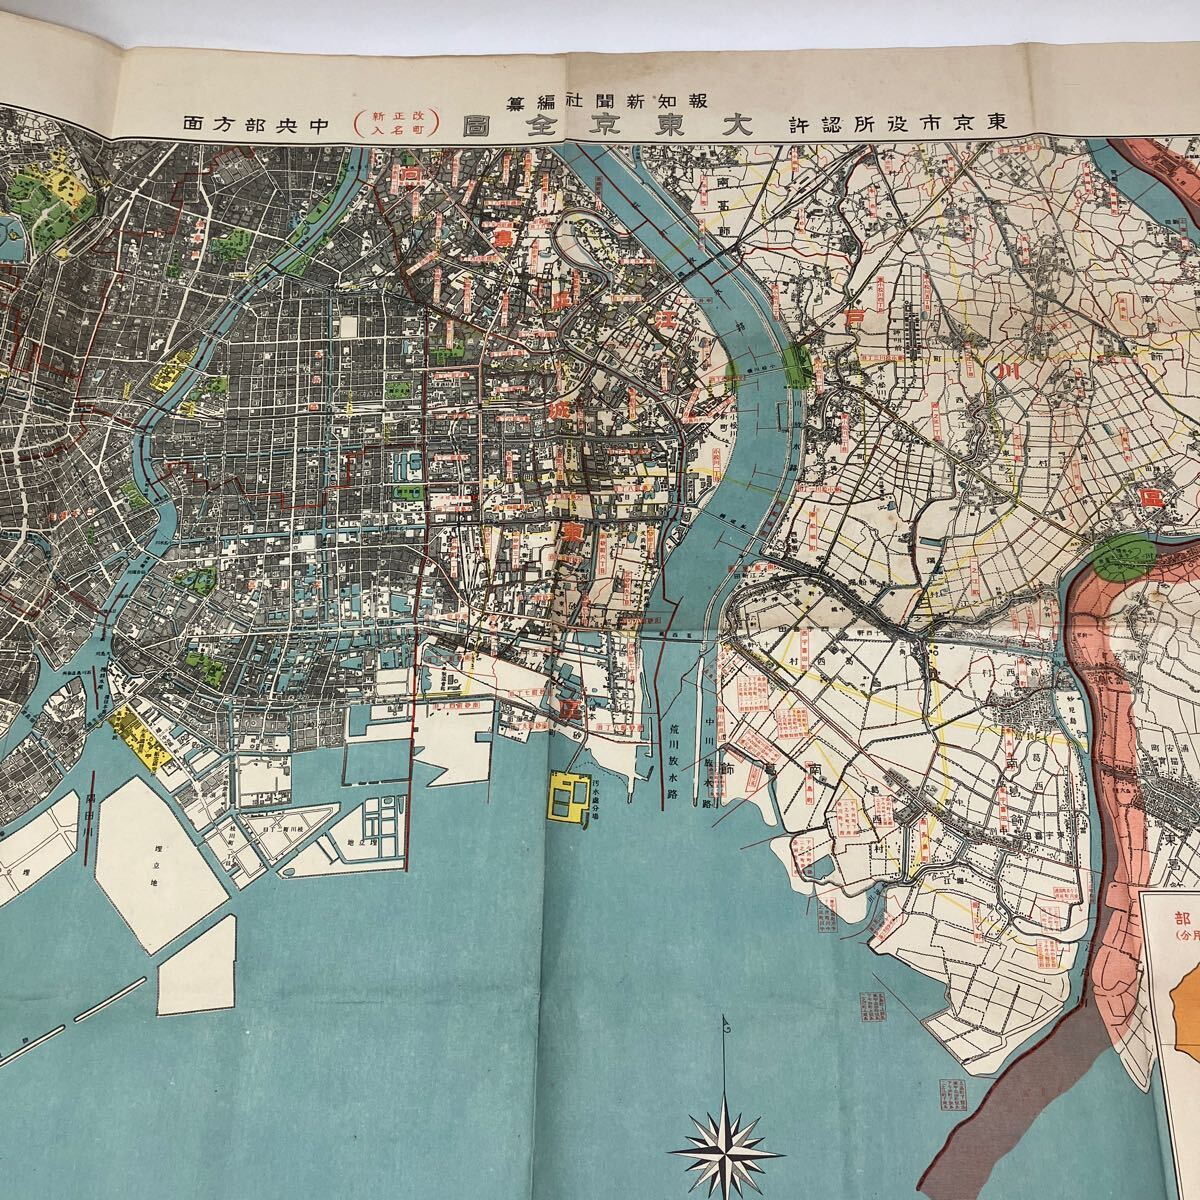 Y0321n【地図】まとめ7枚 東京 横浜市 中央部方面 南部方面 陸地測量部認許 隣接町村併合記念 満50年記念 古地図の画像5